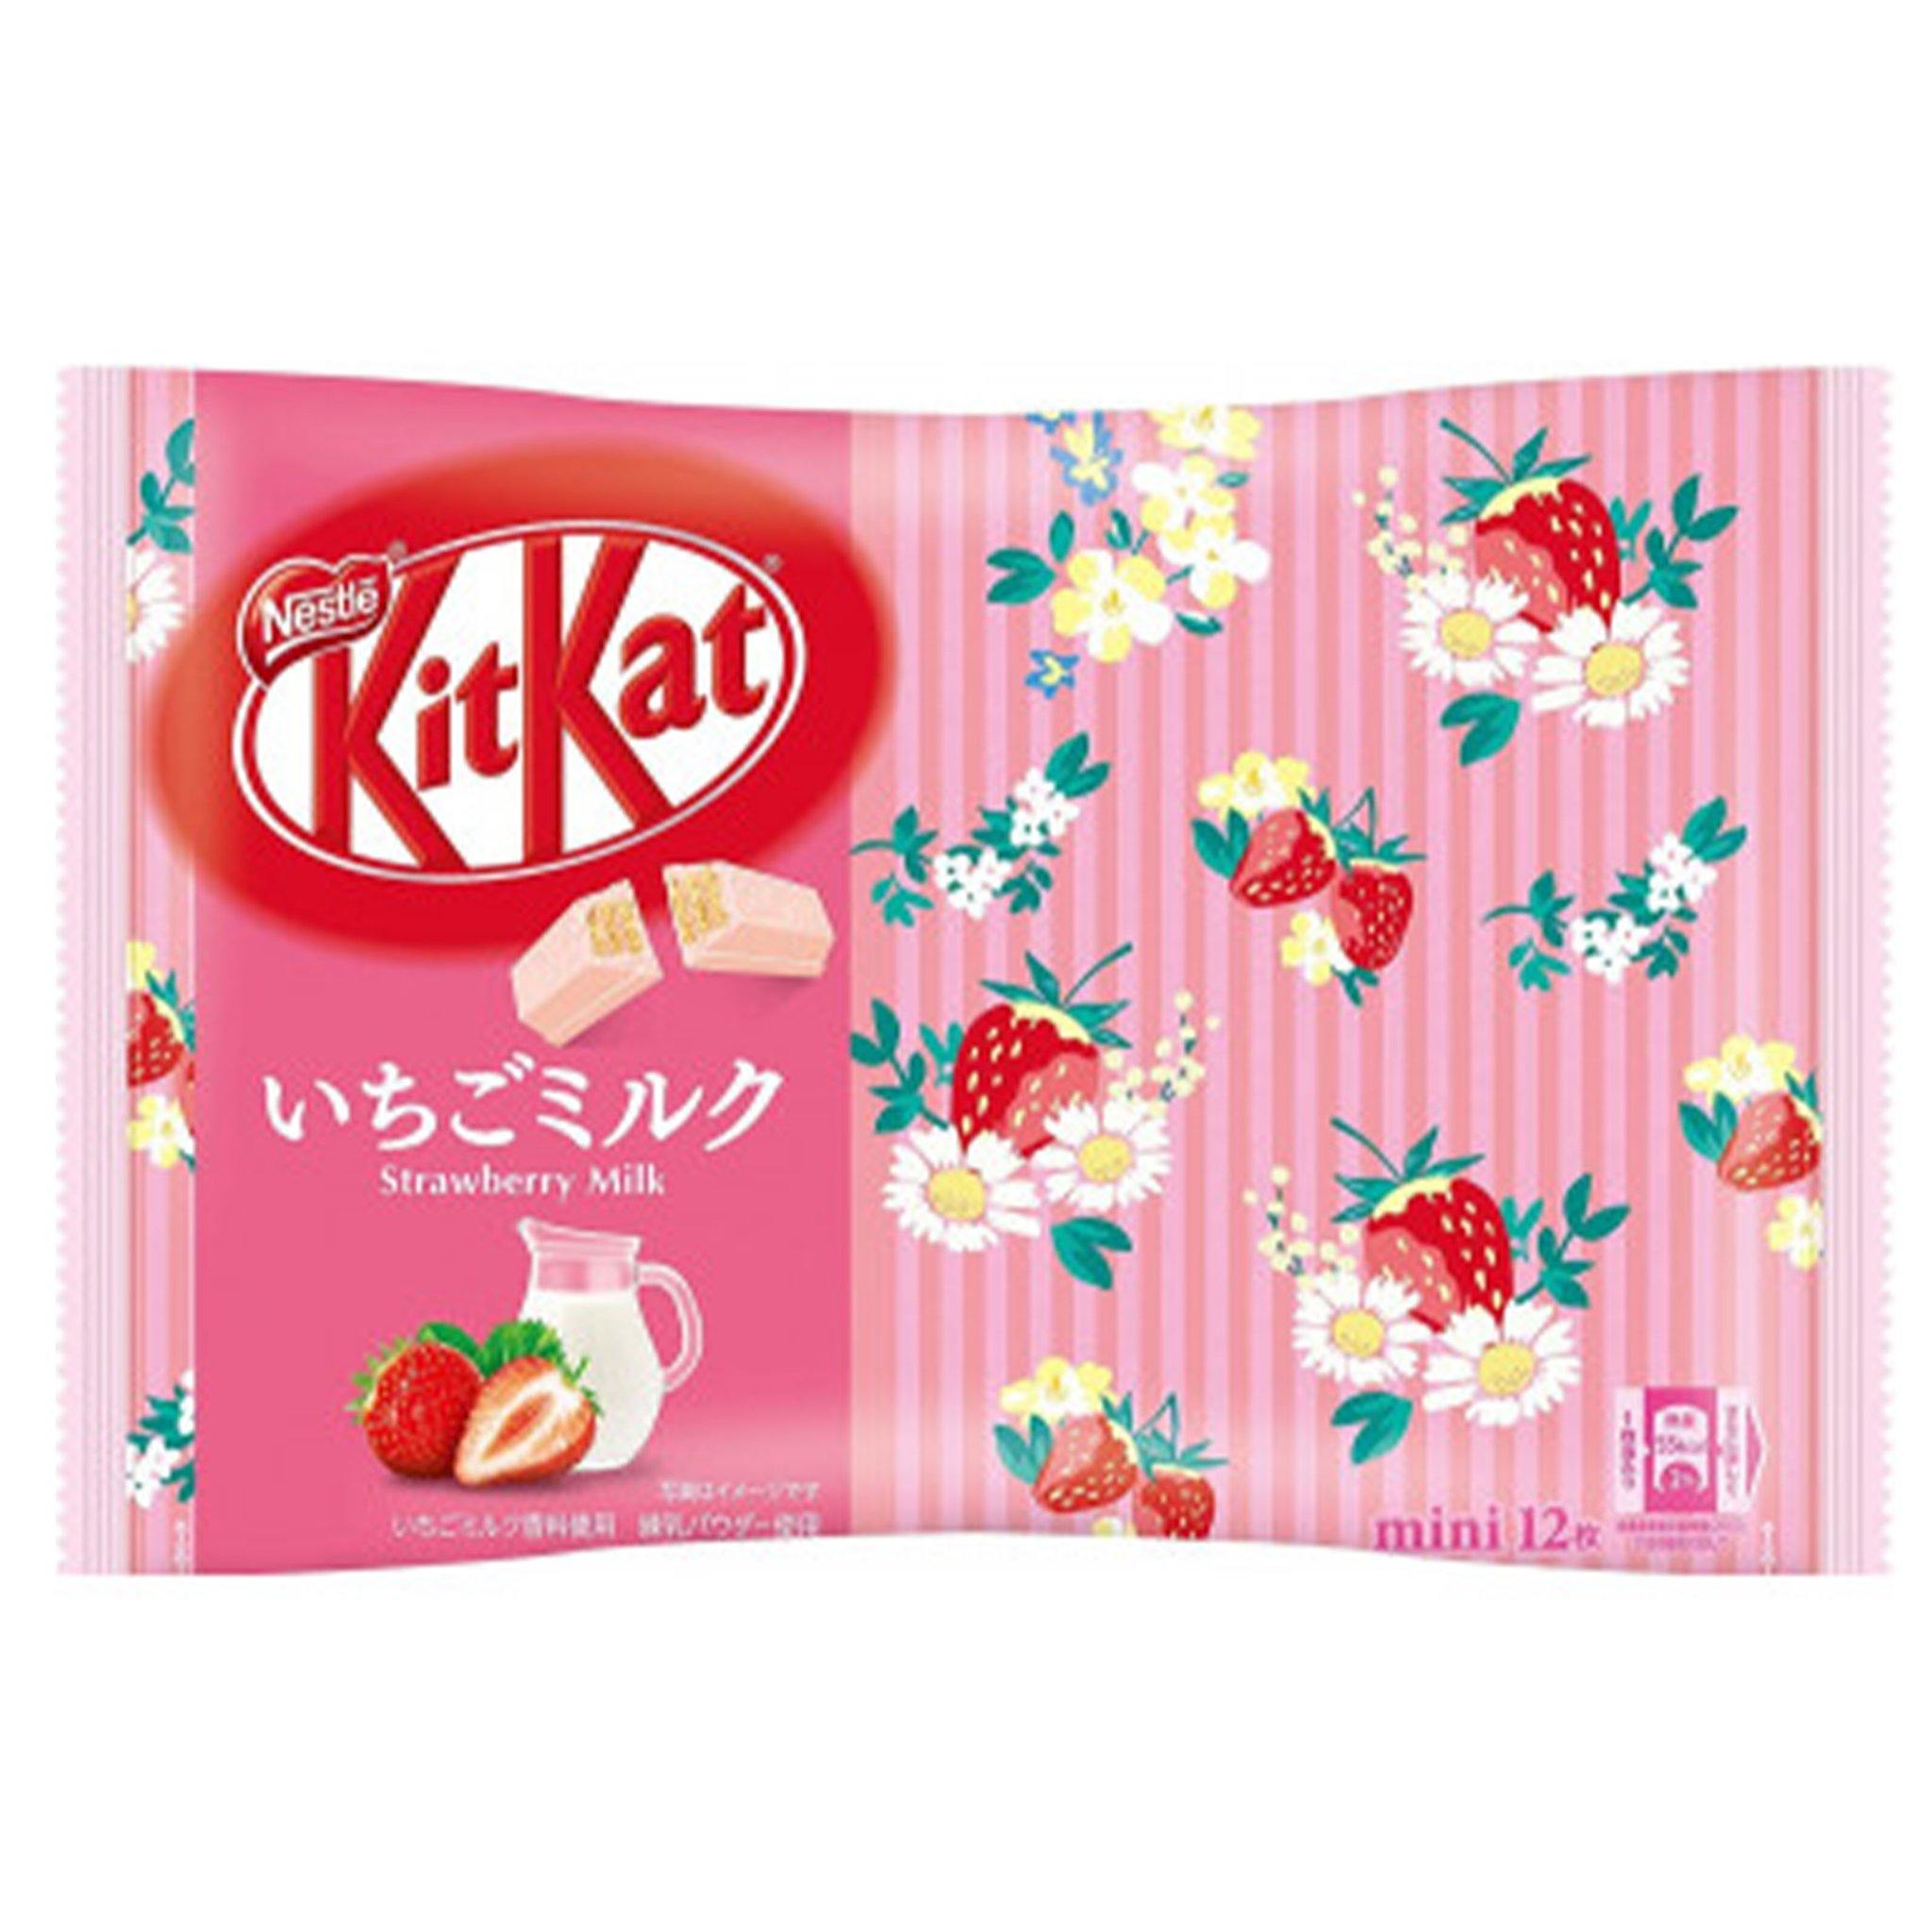 Kit Kat Strawberry Milk - Japan - Sweet Exotics